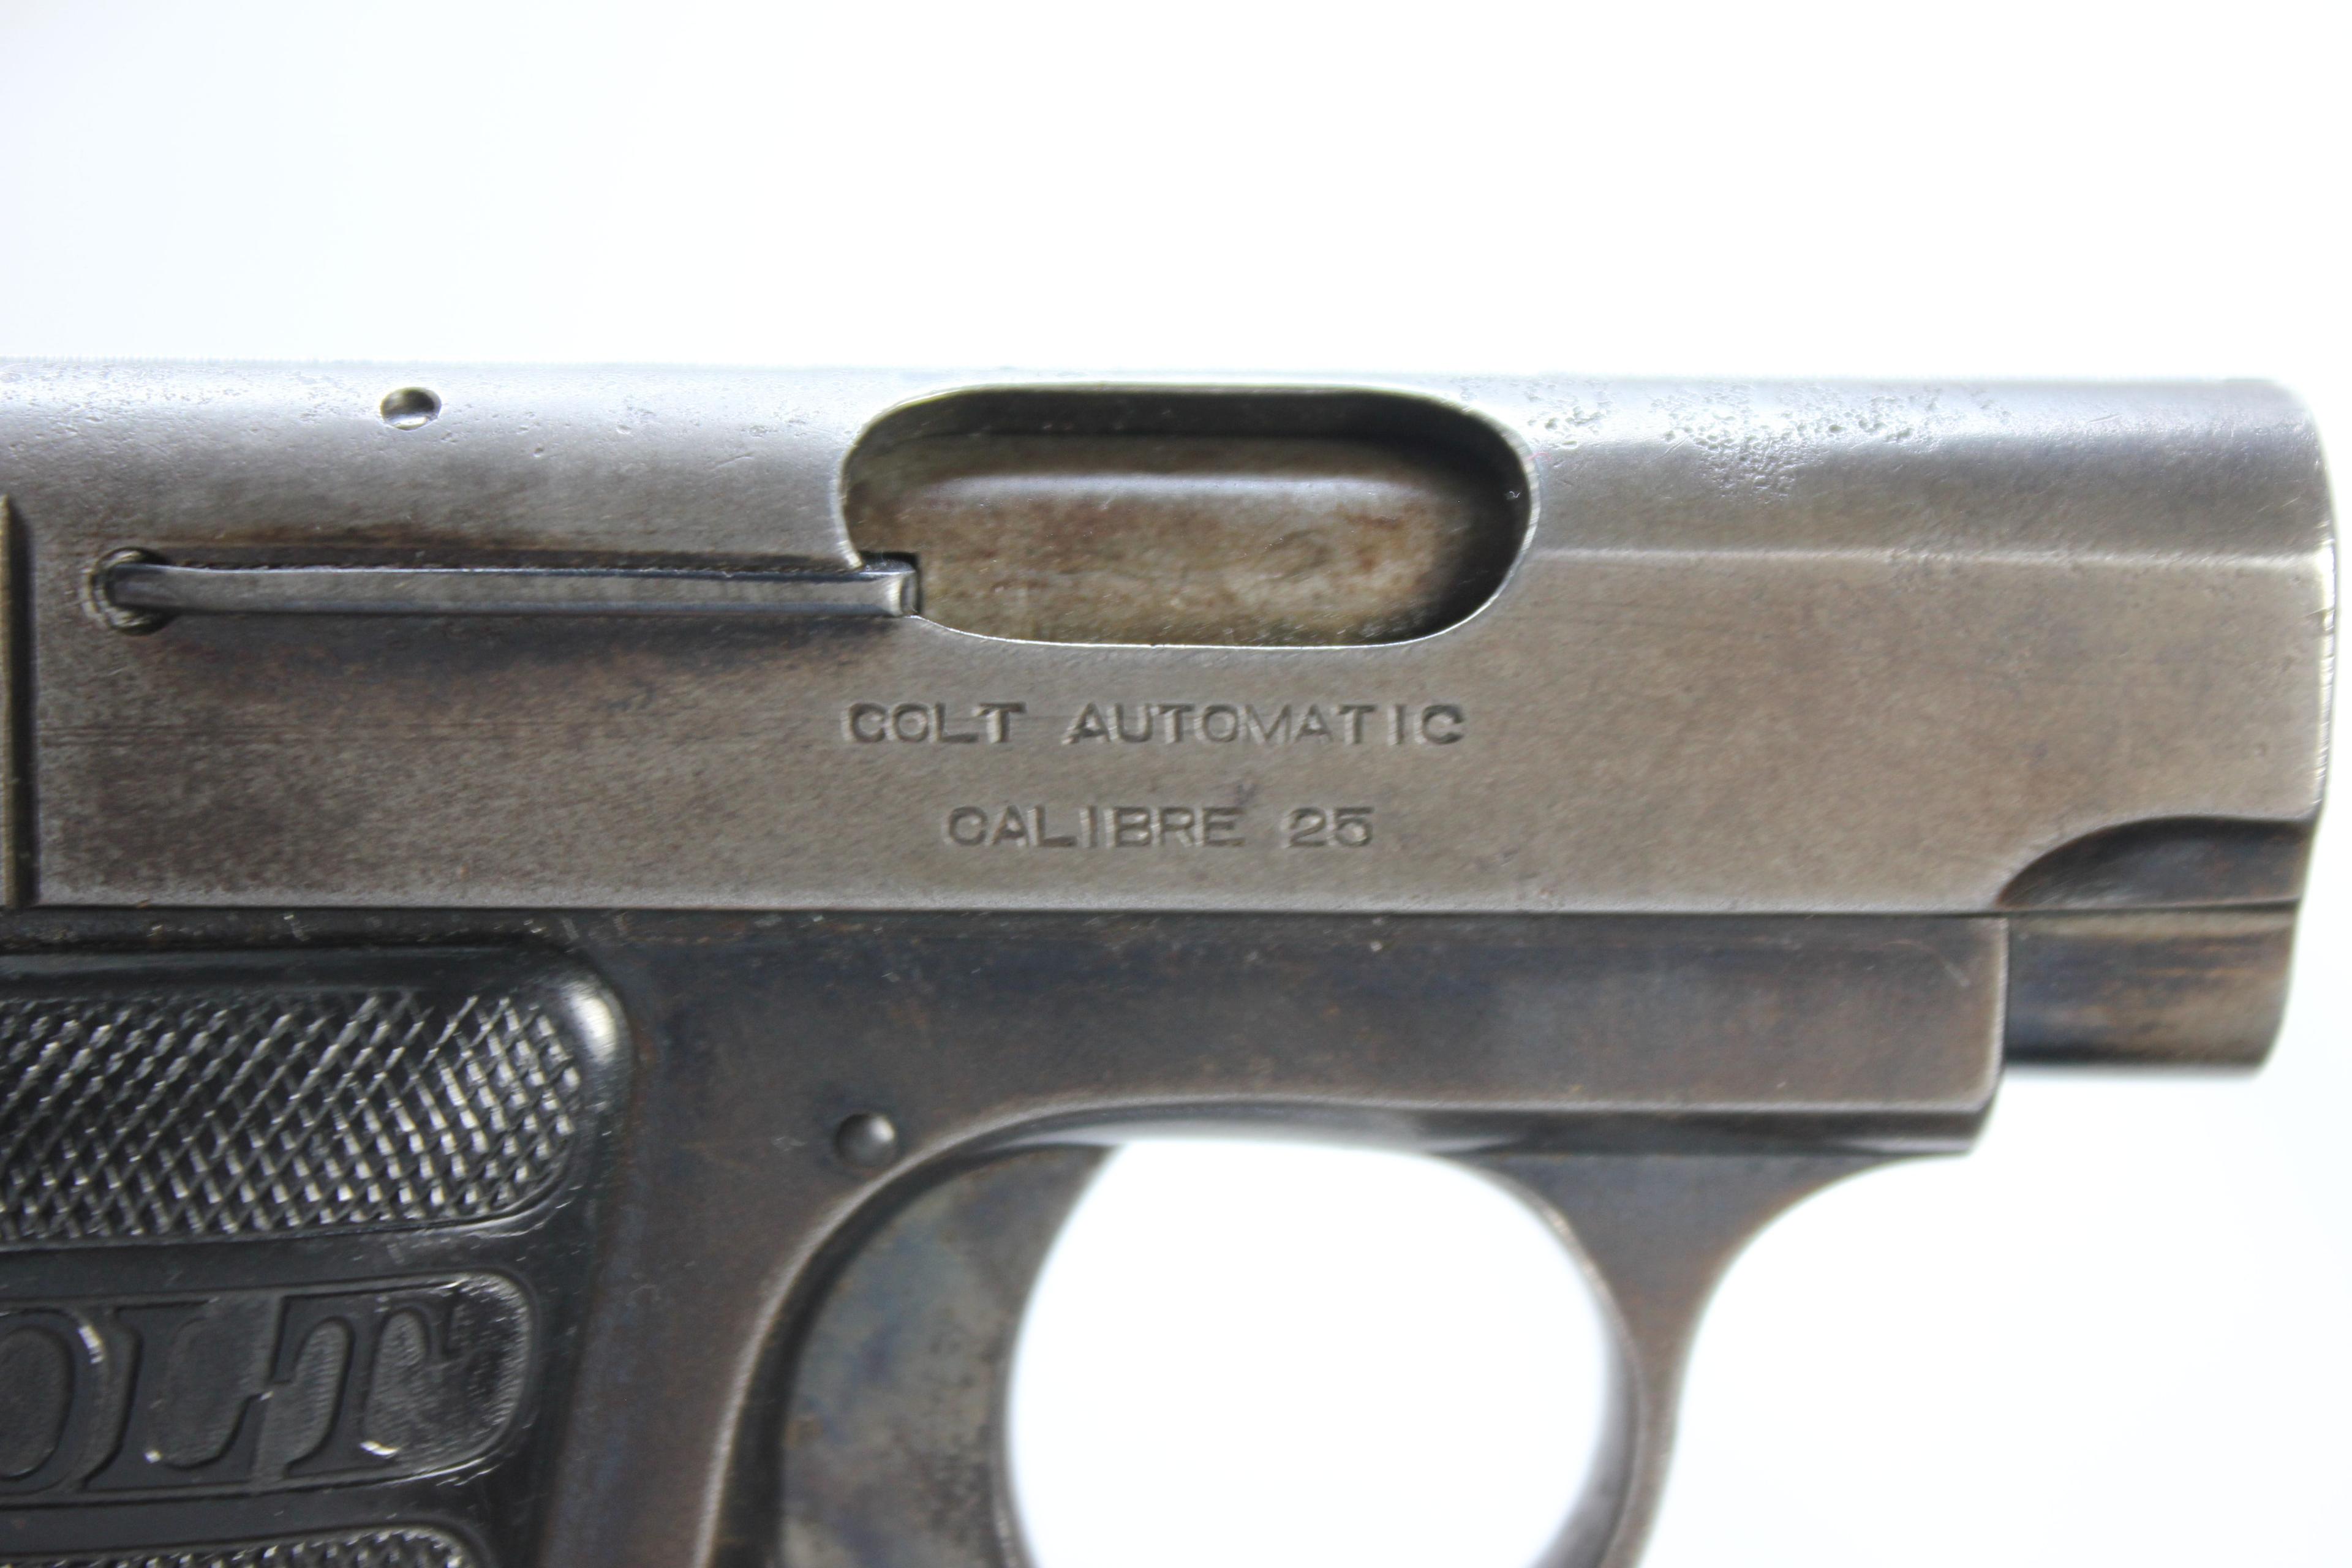 Colt Vest Pocket Model 1908 Hammerless .25 Auto. Cal. Semi-Automatic Pistol w/6-Rd. Magazine; SN 206